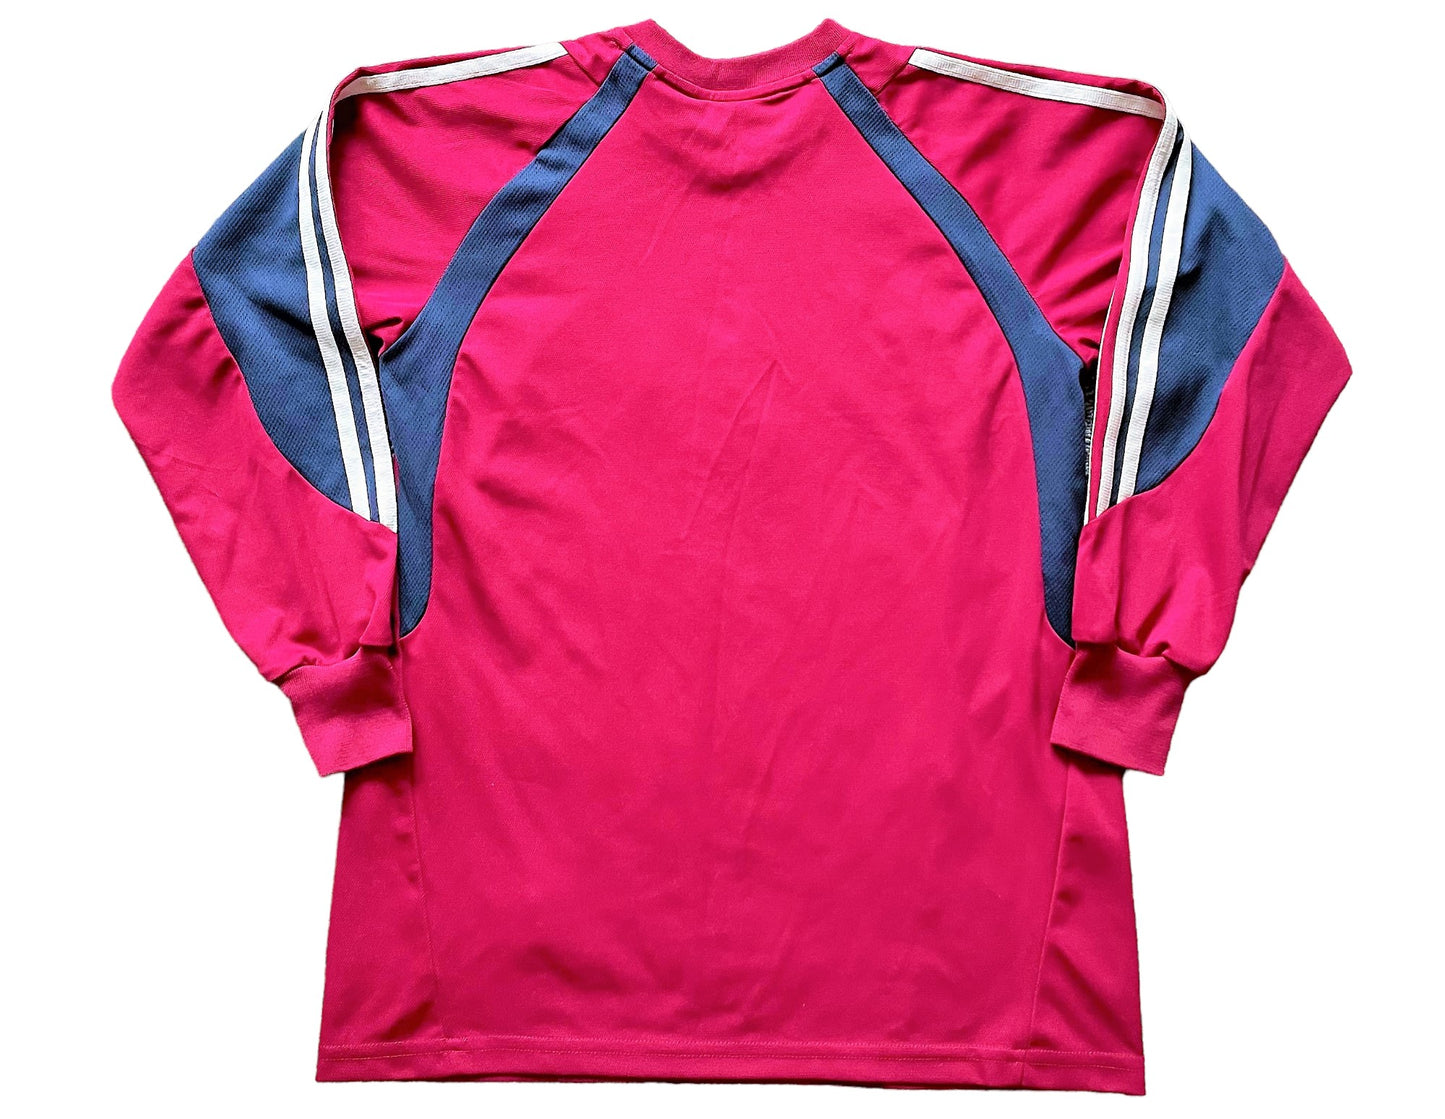 Newcastle 2004 Goalkeeper Shirt (excellent) Adults XS/Large Boys 152